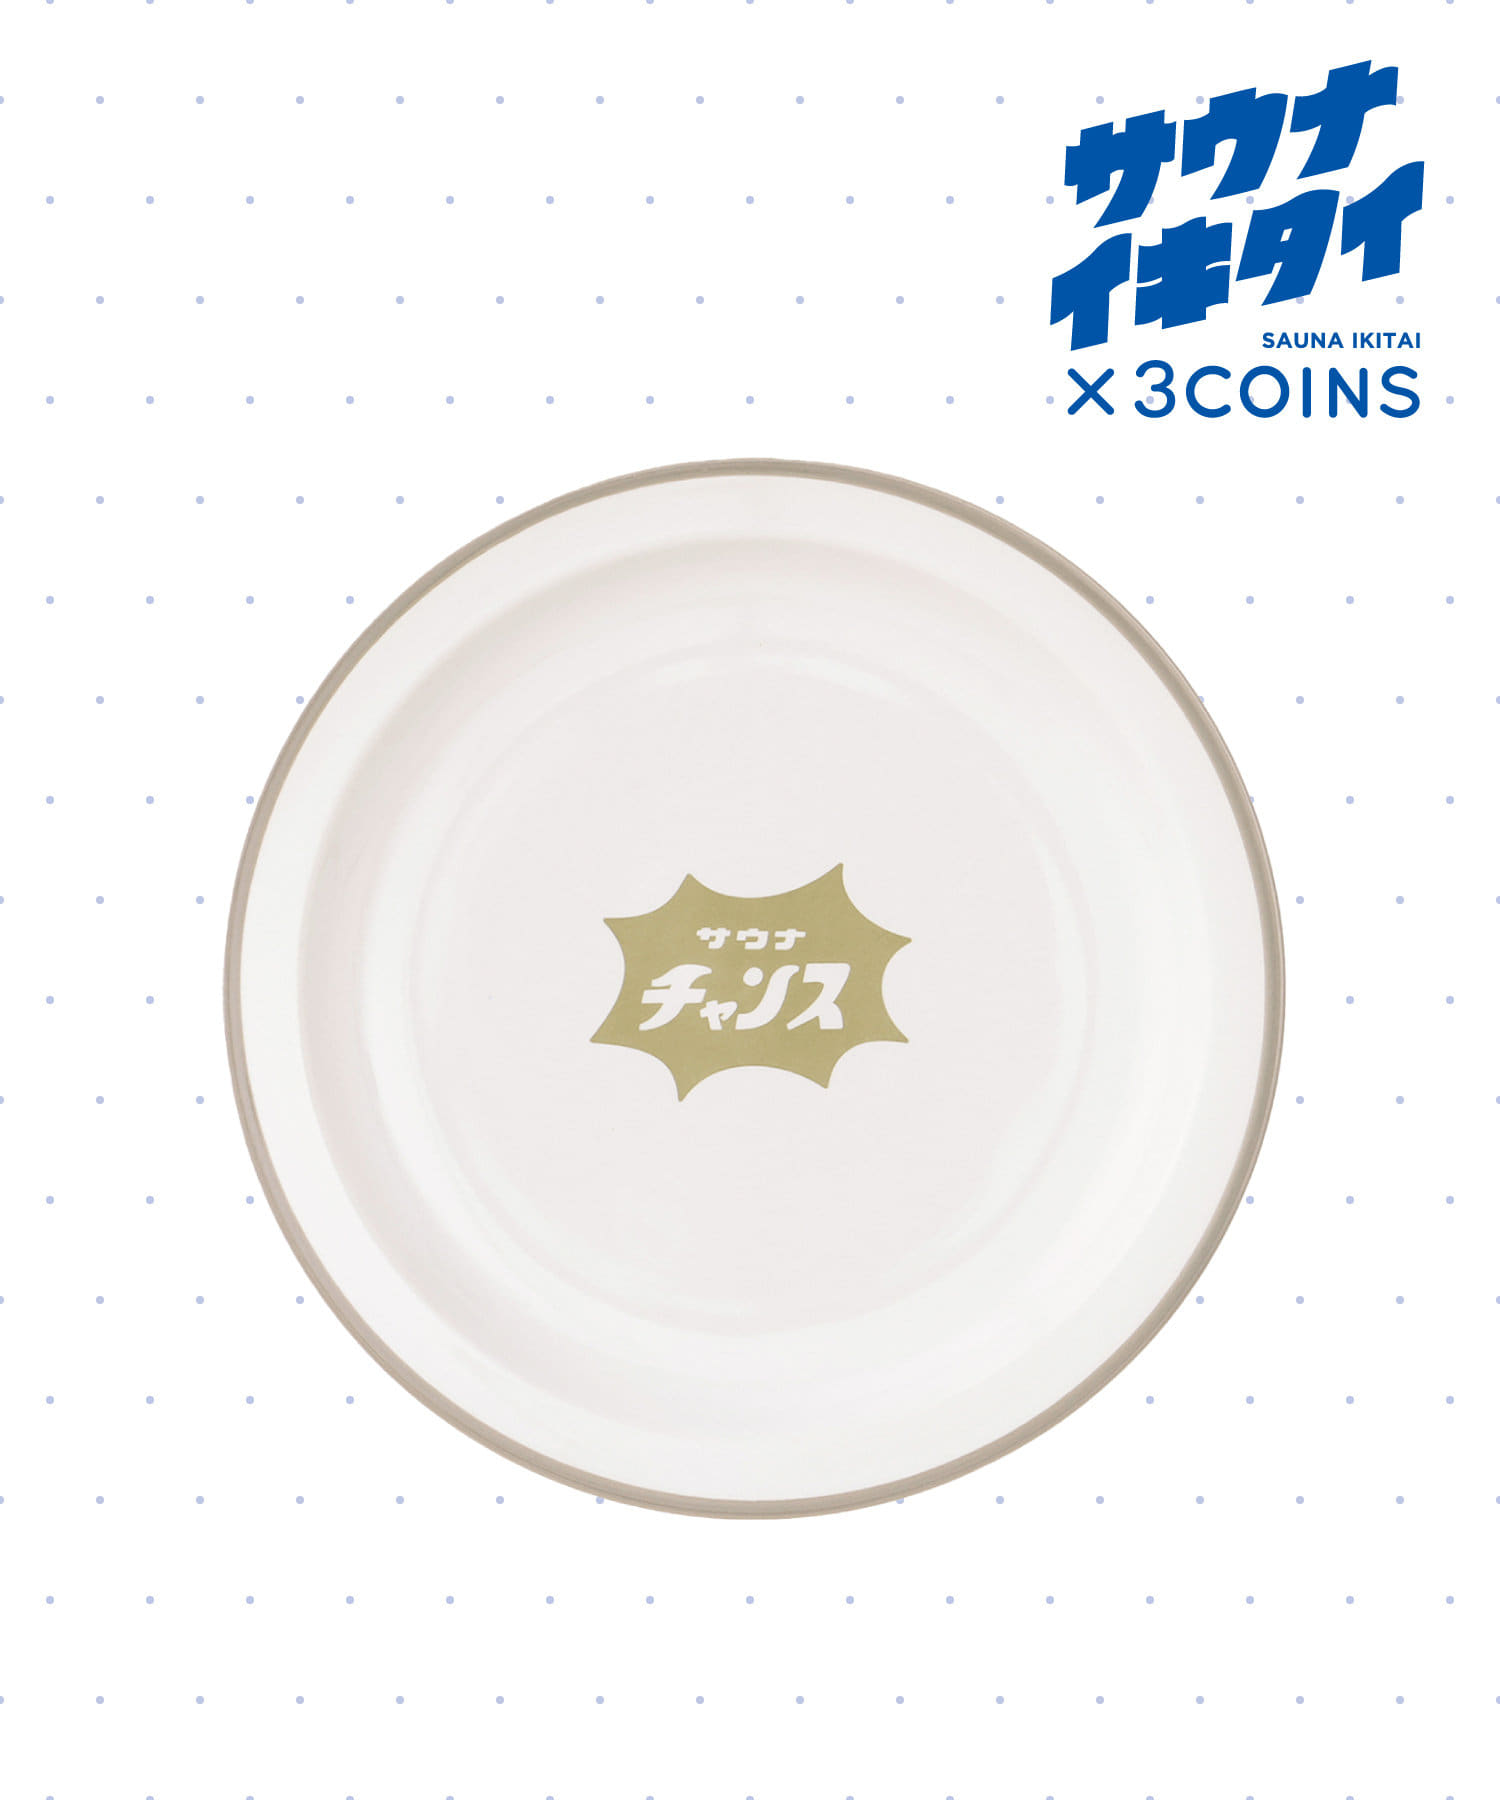 3COINS(スリーコインズ) 【サウナイキタイ】サ飯皿